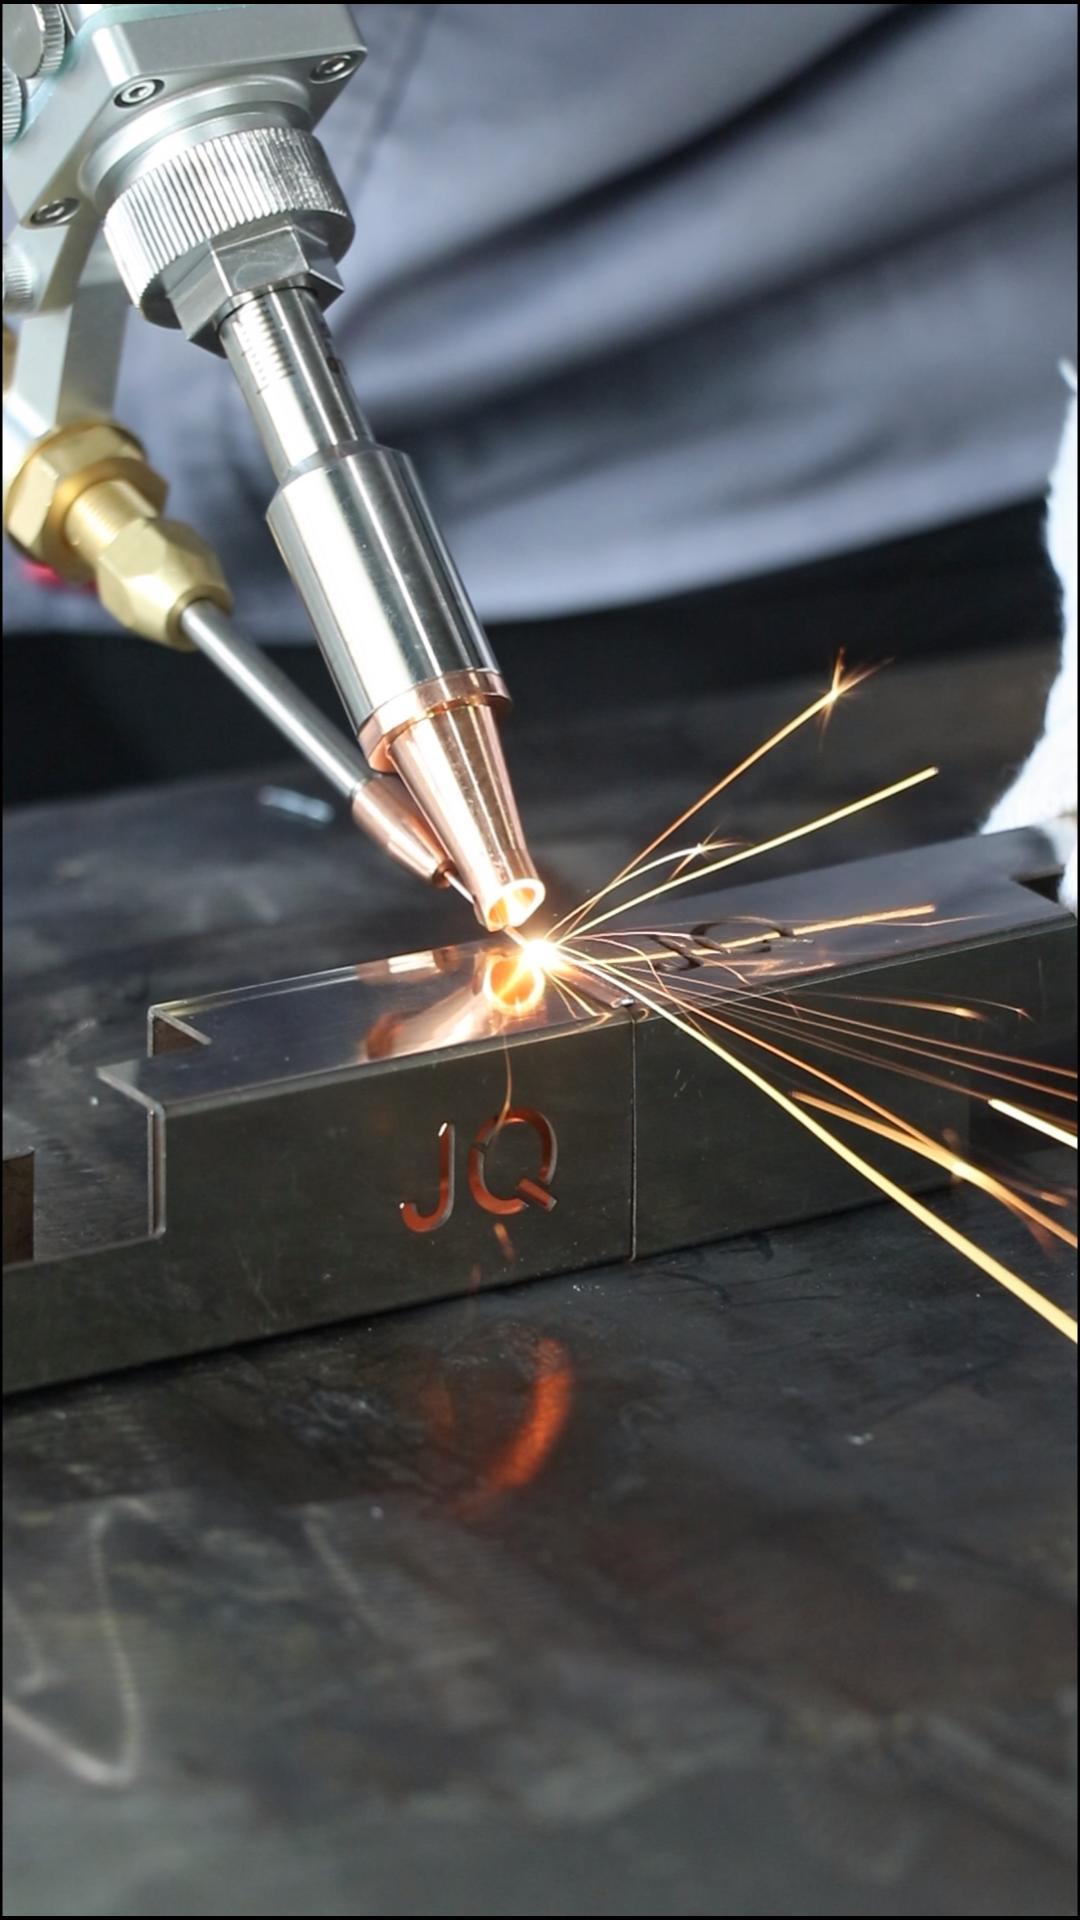 jq laser welder.jpg